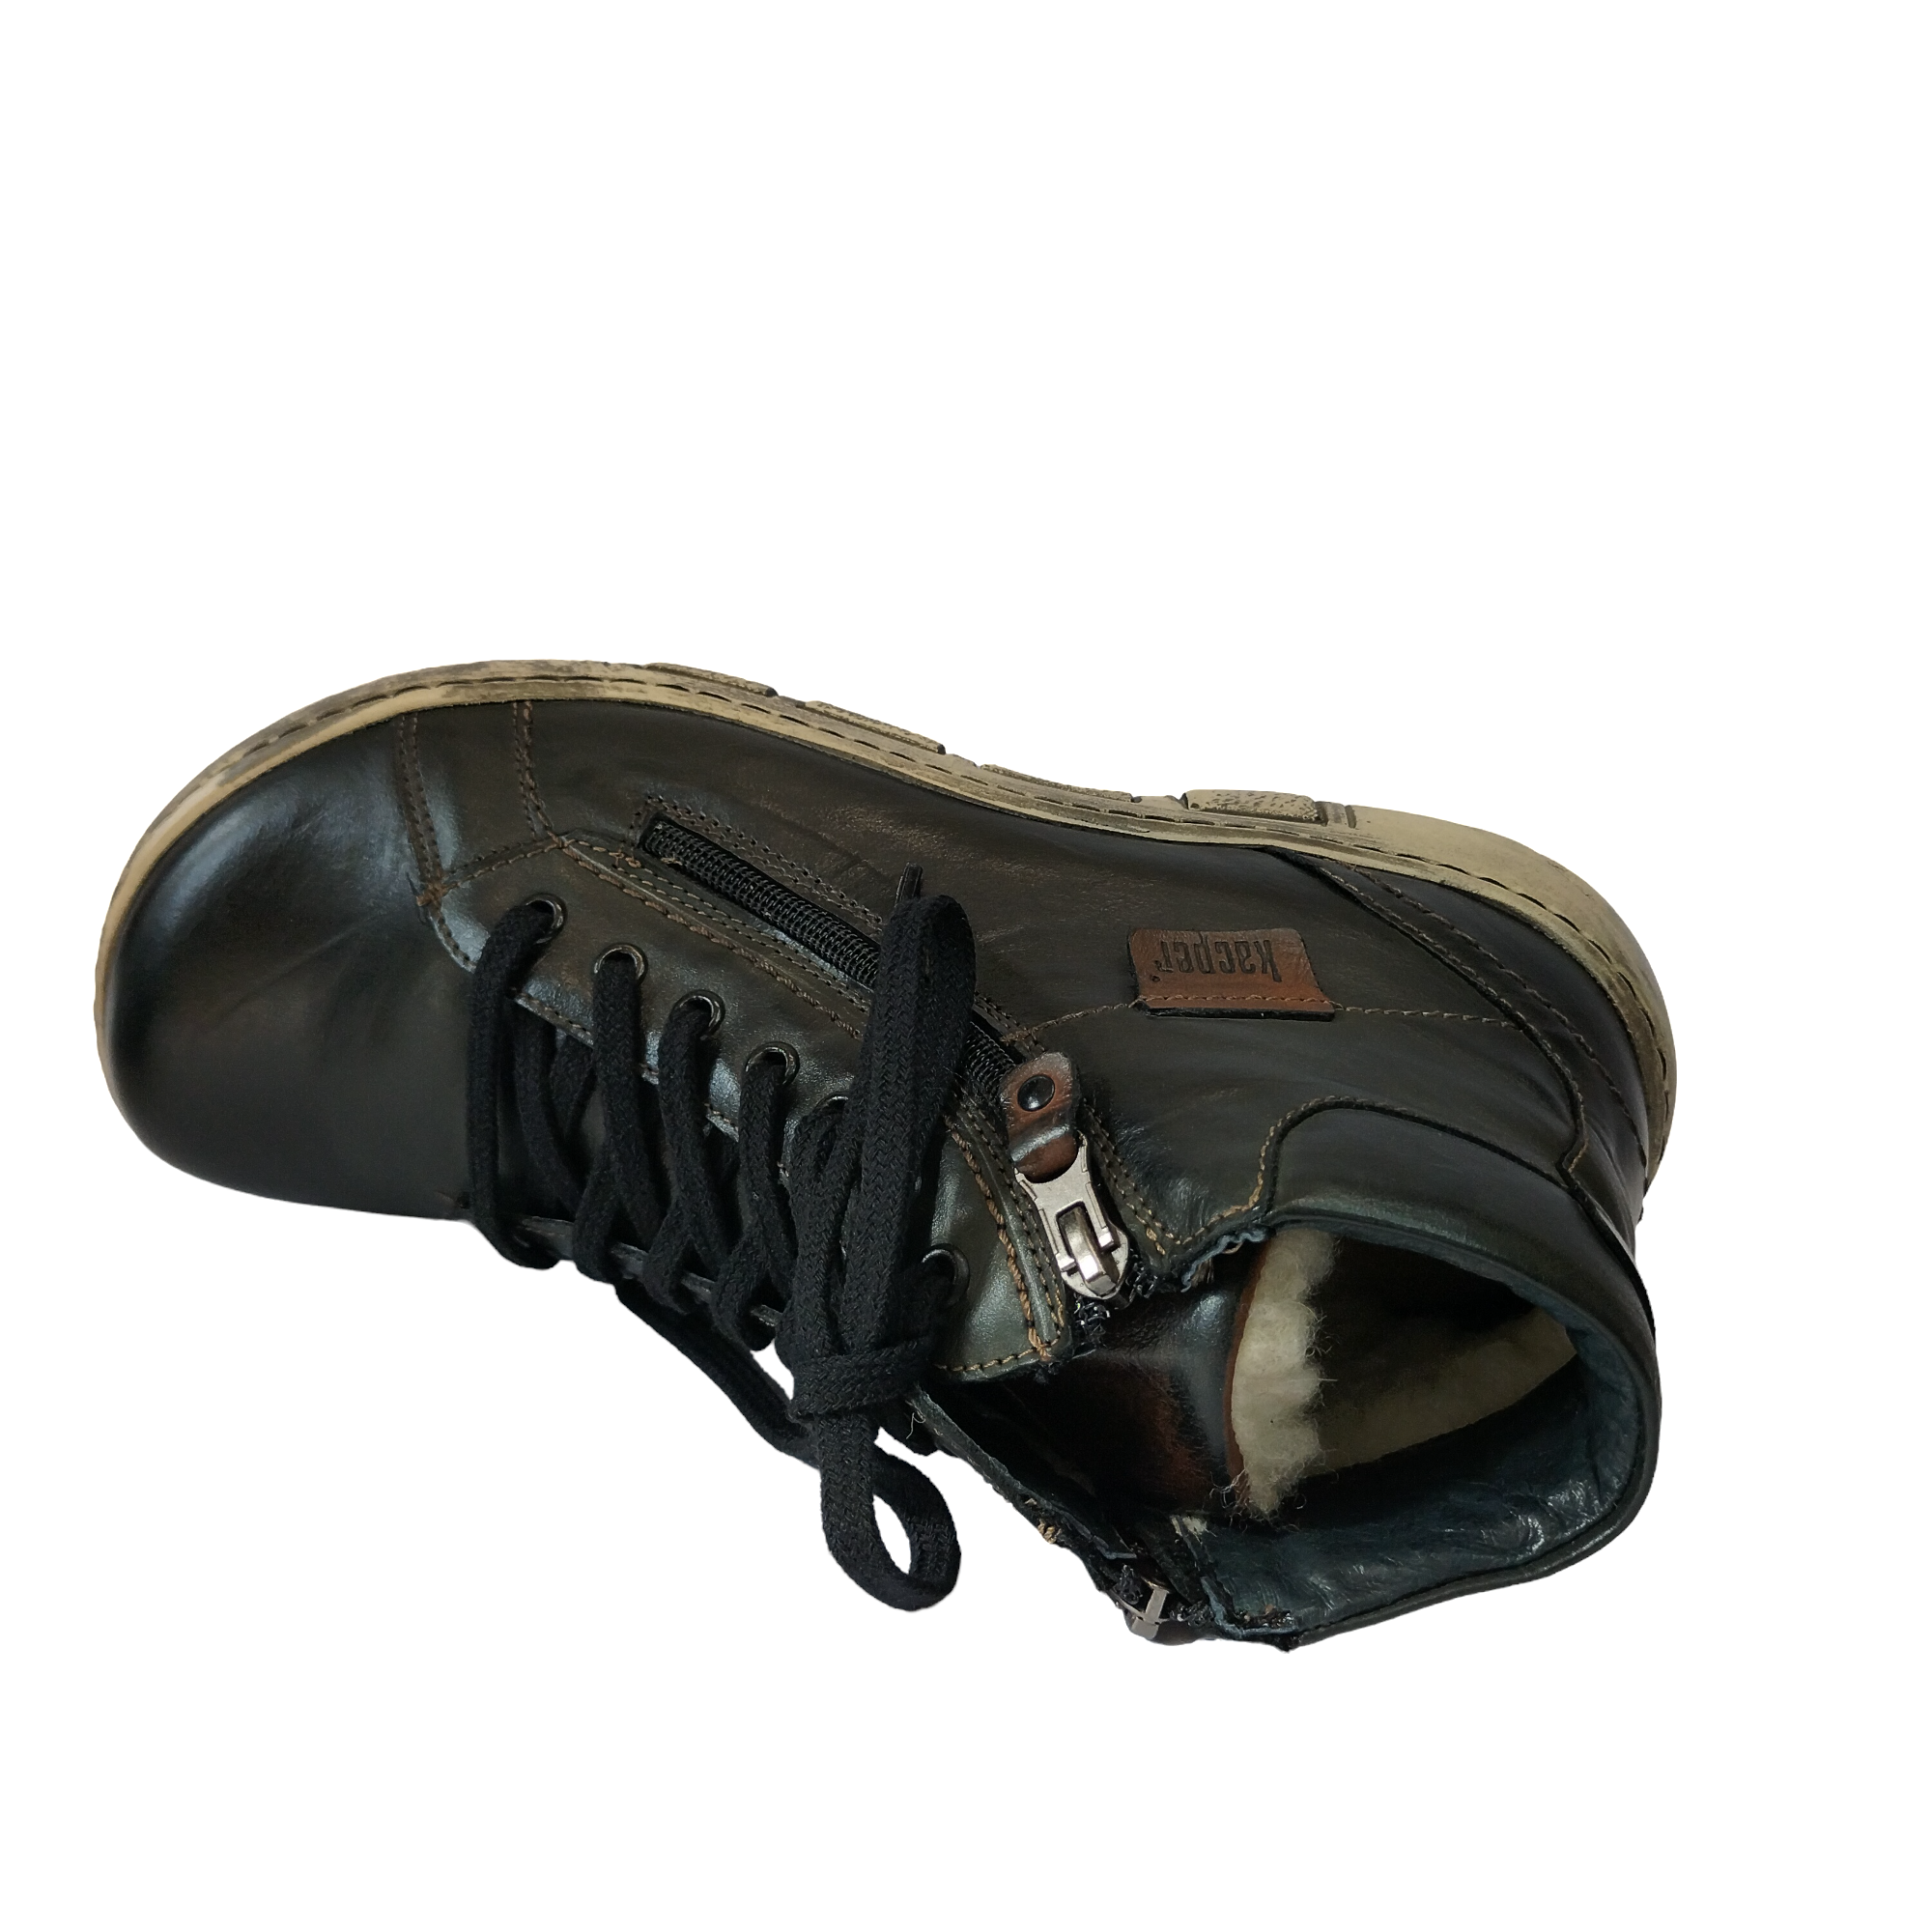 Kacper 3-1288 M - shoe&amp;me - Kacper - Boot - Boots, Mens, Winter